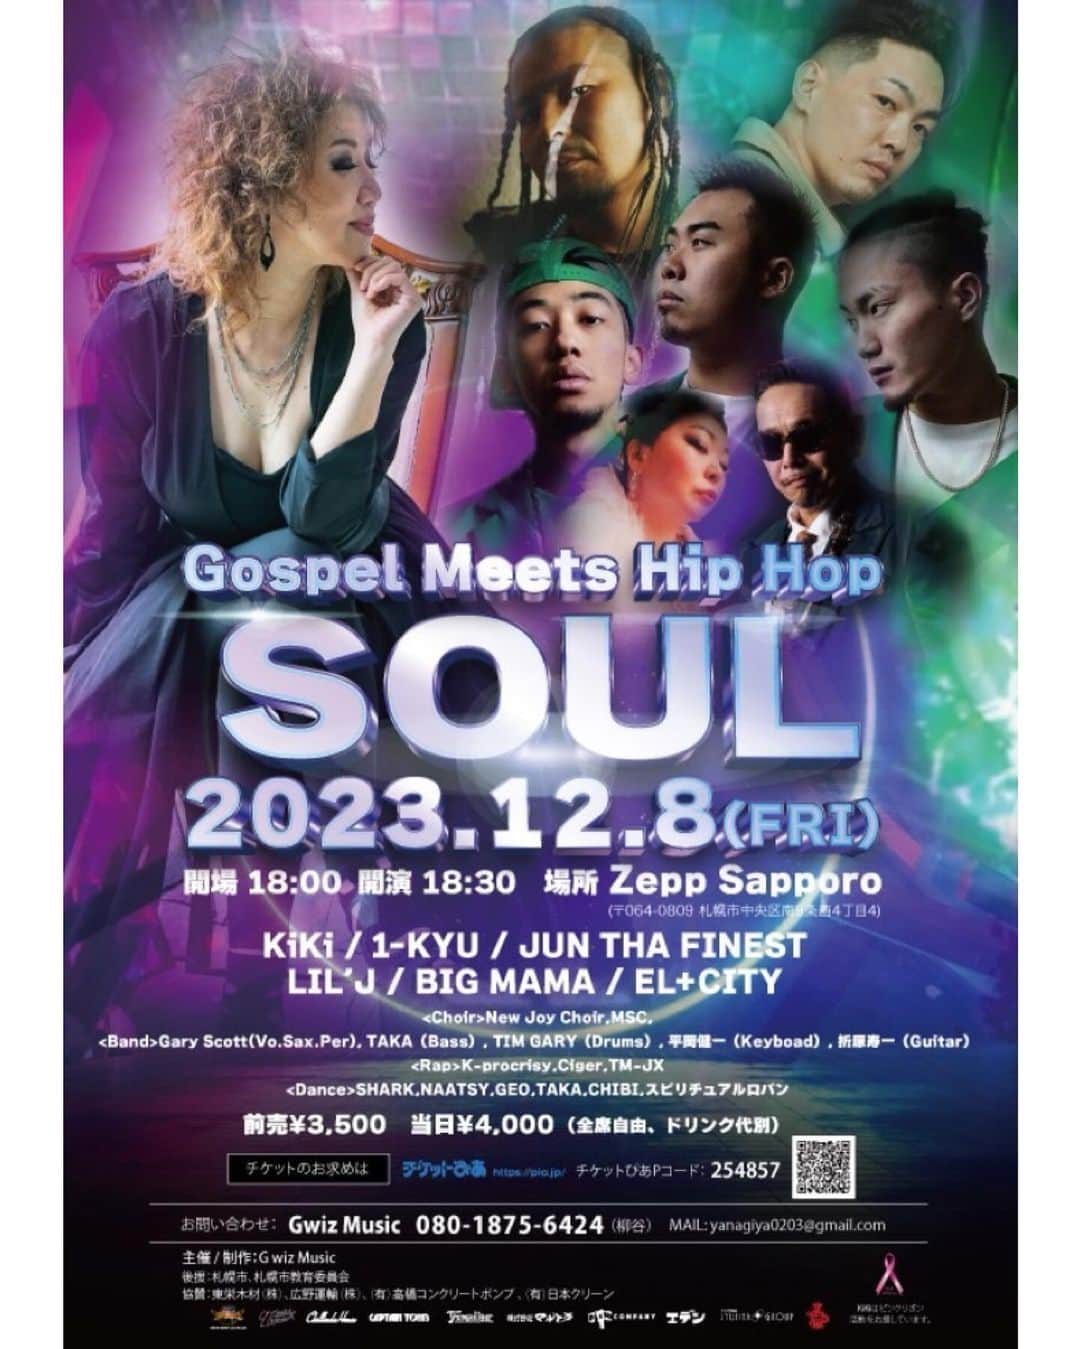 DIG DA GOOD IMCのインスタグラム：「【LIVE INFO】  12/8(金) Zepp Sapporo  にて開催の「"SOUL" Gospel Meets Hip Hop」に、1-KYU & JUN THA FINEST, LIL'J, EL+CITY が出演！  "SOUL" Gospel Meets Hip Hop  2023.12.08(FRI)  Zepp Sapporo [札幌市中央区南9条西4丁目4]  OPEN 18:00  START 18:30   前売 ¥3,500 当日 ¥4,000 [全席自由、ドリンク 代別]  チケットぴあPコード : 254857  ■CAST KIKI & New Joy Choir Gary Scott (Vo.Sax.Par)  TAKA (Bass) 折原寿一 (Guitar) TIM GARY (Drums)  平岡健一 (Keyboad) 1-KYU from N.C.B.B (Vo.) JUN THA FINEST from 27Beatworxx (DJ)  LIL’J (TALK BOX. SAX) BIG MAMA (Chorus) EL+CITY (Vo.)   ■RAP K-procrisy / Ciger / TM-JX   ■ DANCE SHARK / NAATY / GEO / TAKA / CHIBI & スピリチュアルロパン  ■主催/制作 G wiz Music  ■後援 札幌市 / 札幌市教育委員会  ■協賛 東栄木材(株) / 広野運輸(株) / (有)高橋コンクリートポンプ / (有)日本クリーン   ■お問合わせ 札幌 G wiz Music 080-1875-6424(柳谷)  yanagiya0203@gmail.com  #1KYU #JUNTHAFINEST #LILJ #ELCITY #NCBB #DDGG #DDG @1kyu @junthafinest @lilj_funxta @elcity__forever @kidella_elcity @2k_elcity @jasonvasara_elcity」